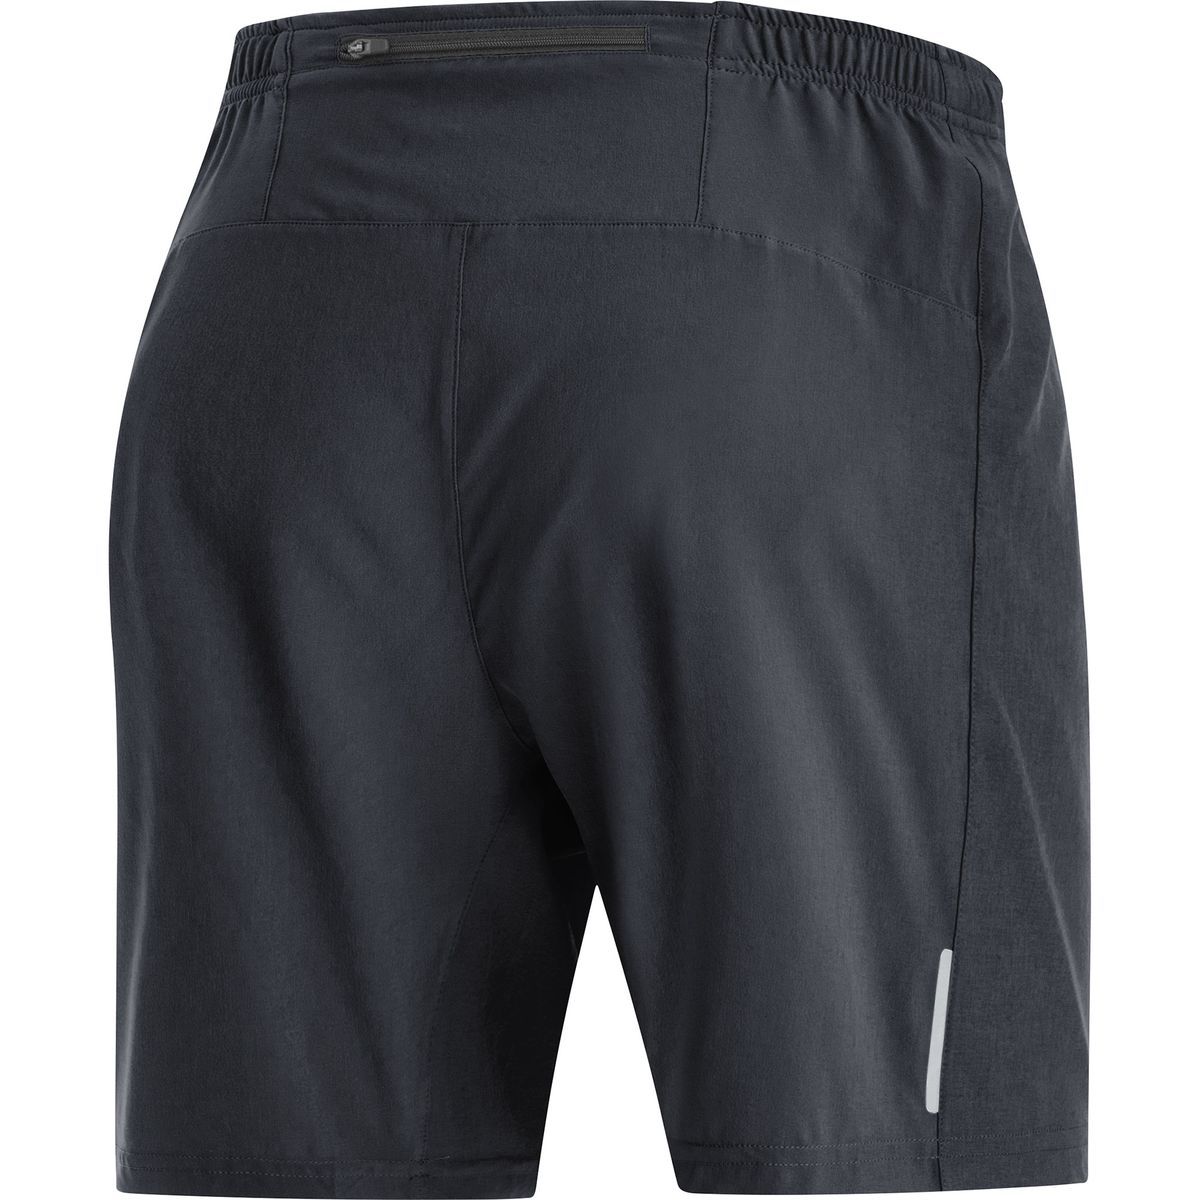 Gore R5 5 Inch Shorts Herren Shorts_3